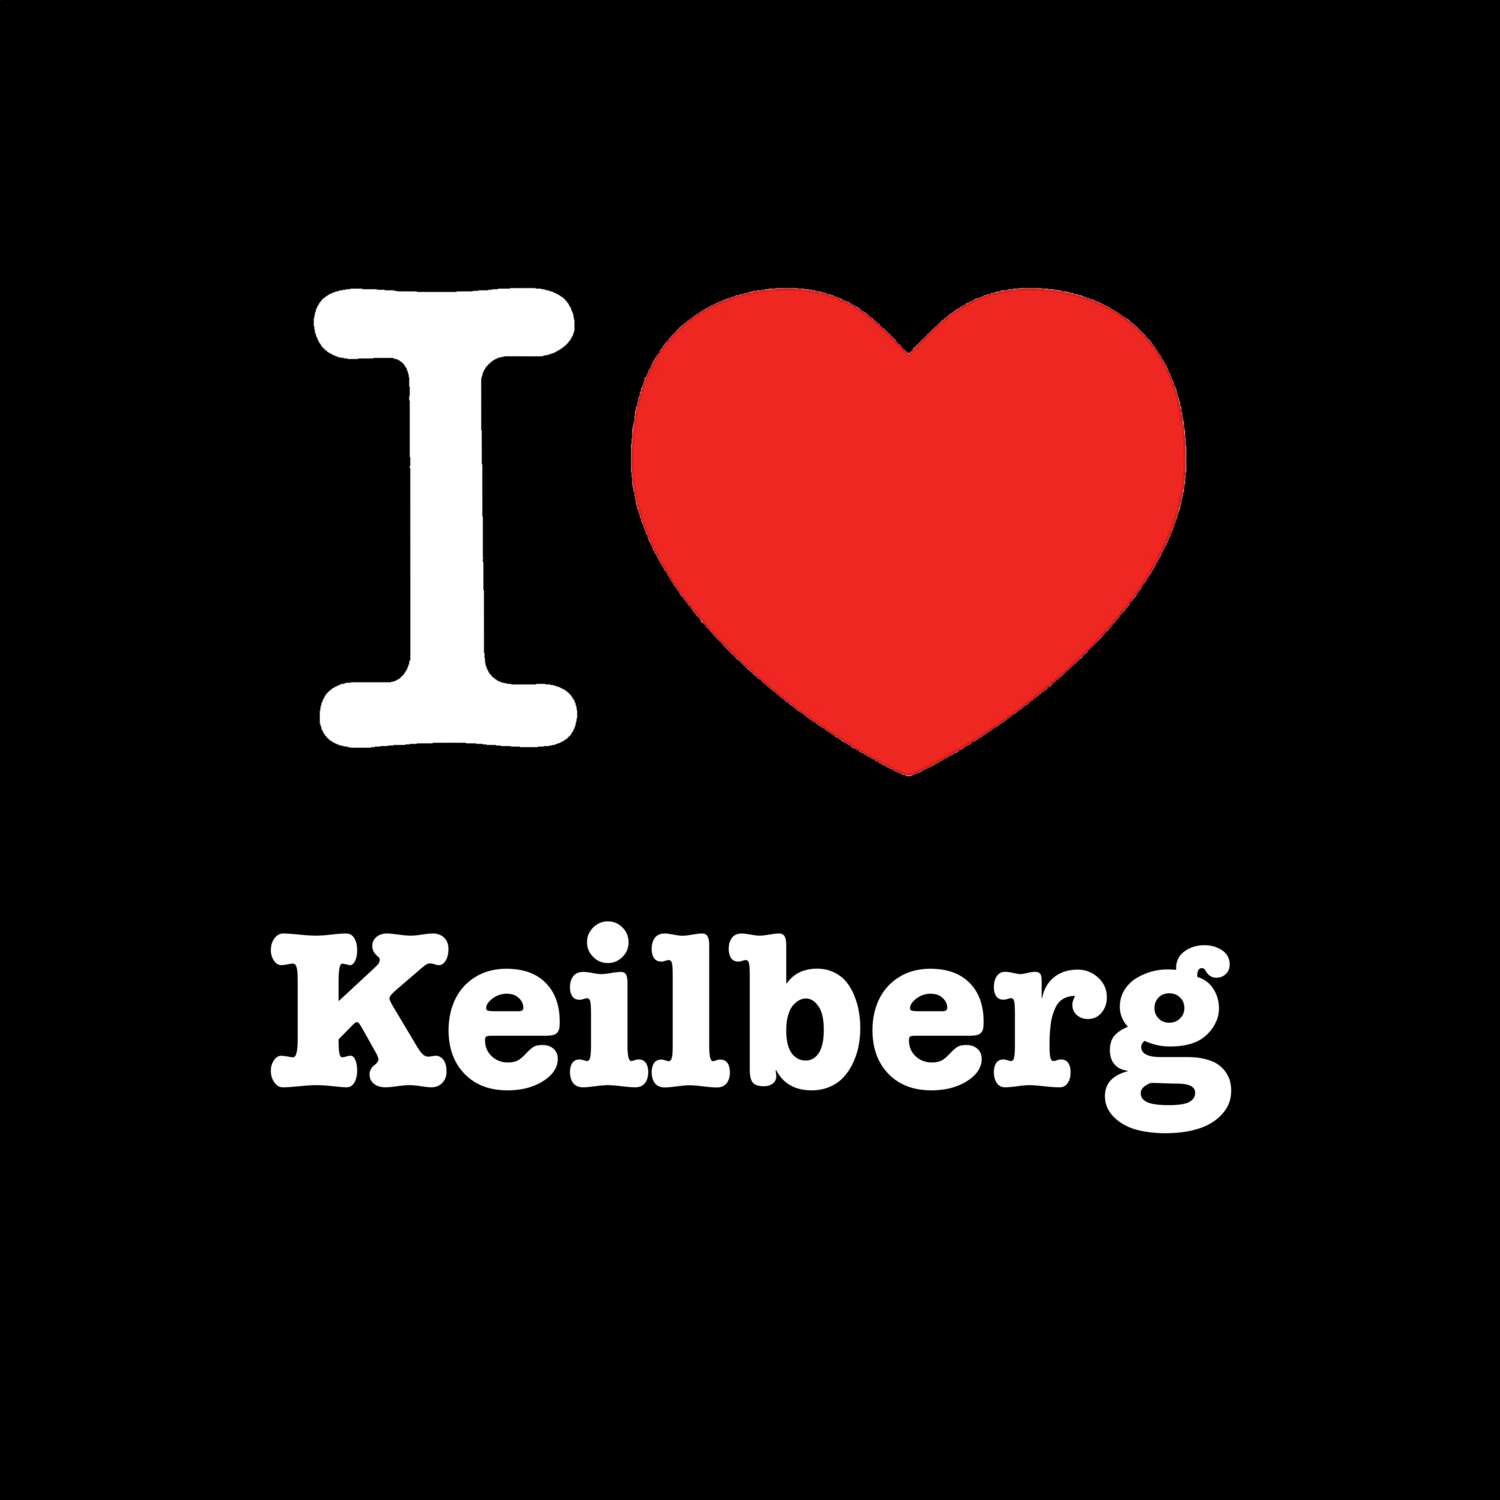 Keilberg T-Shirt »I love«